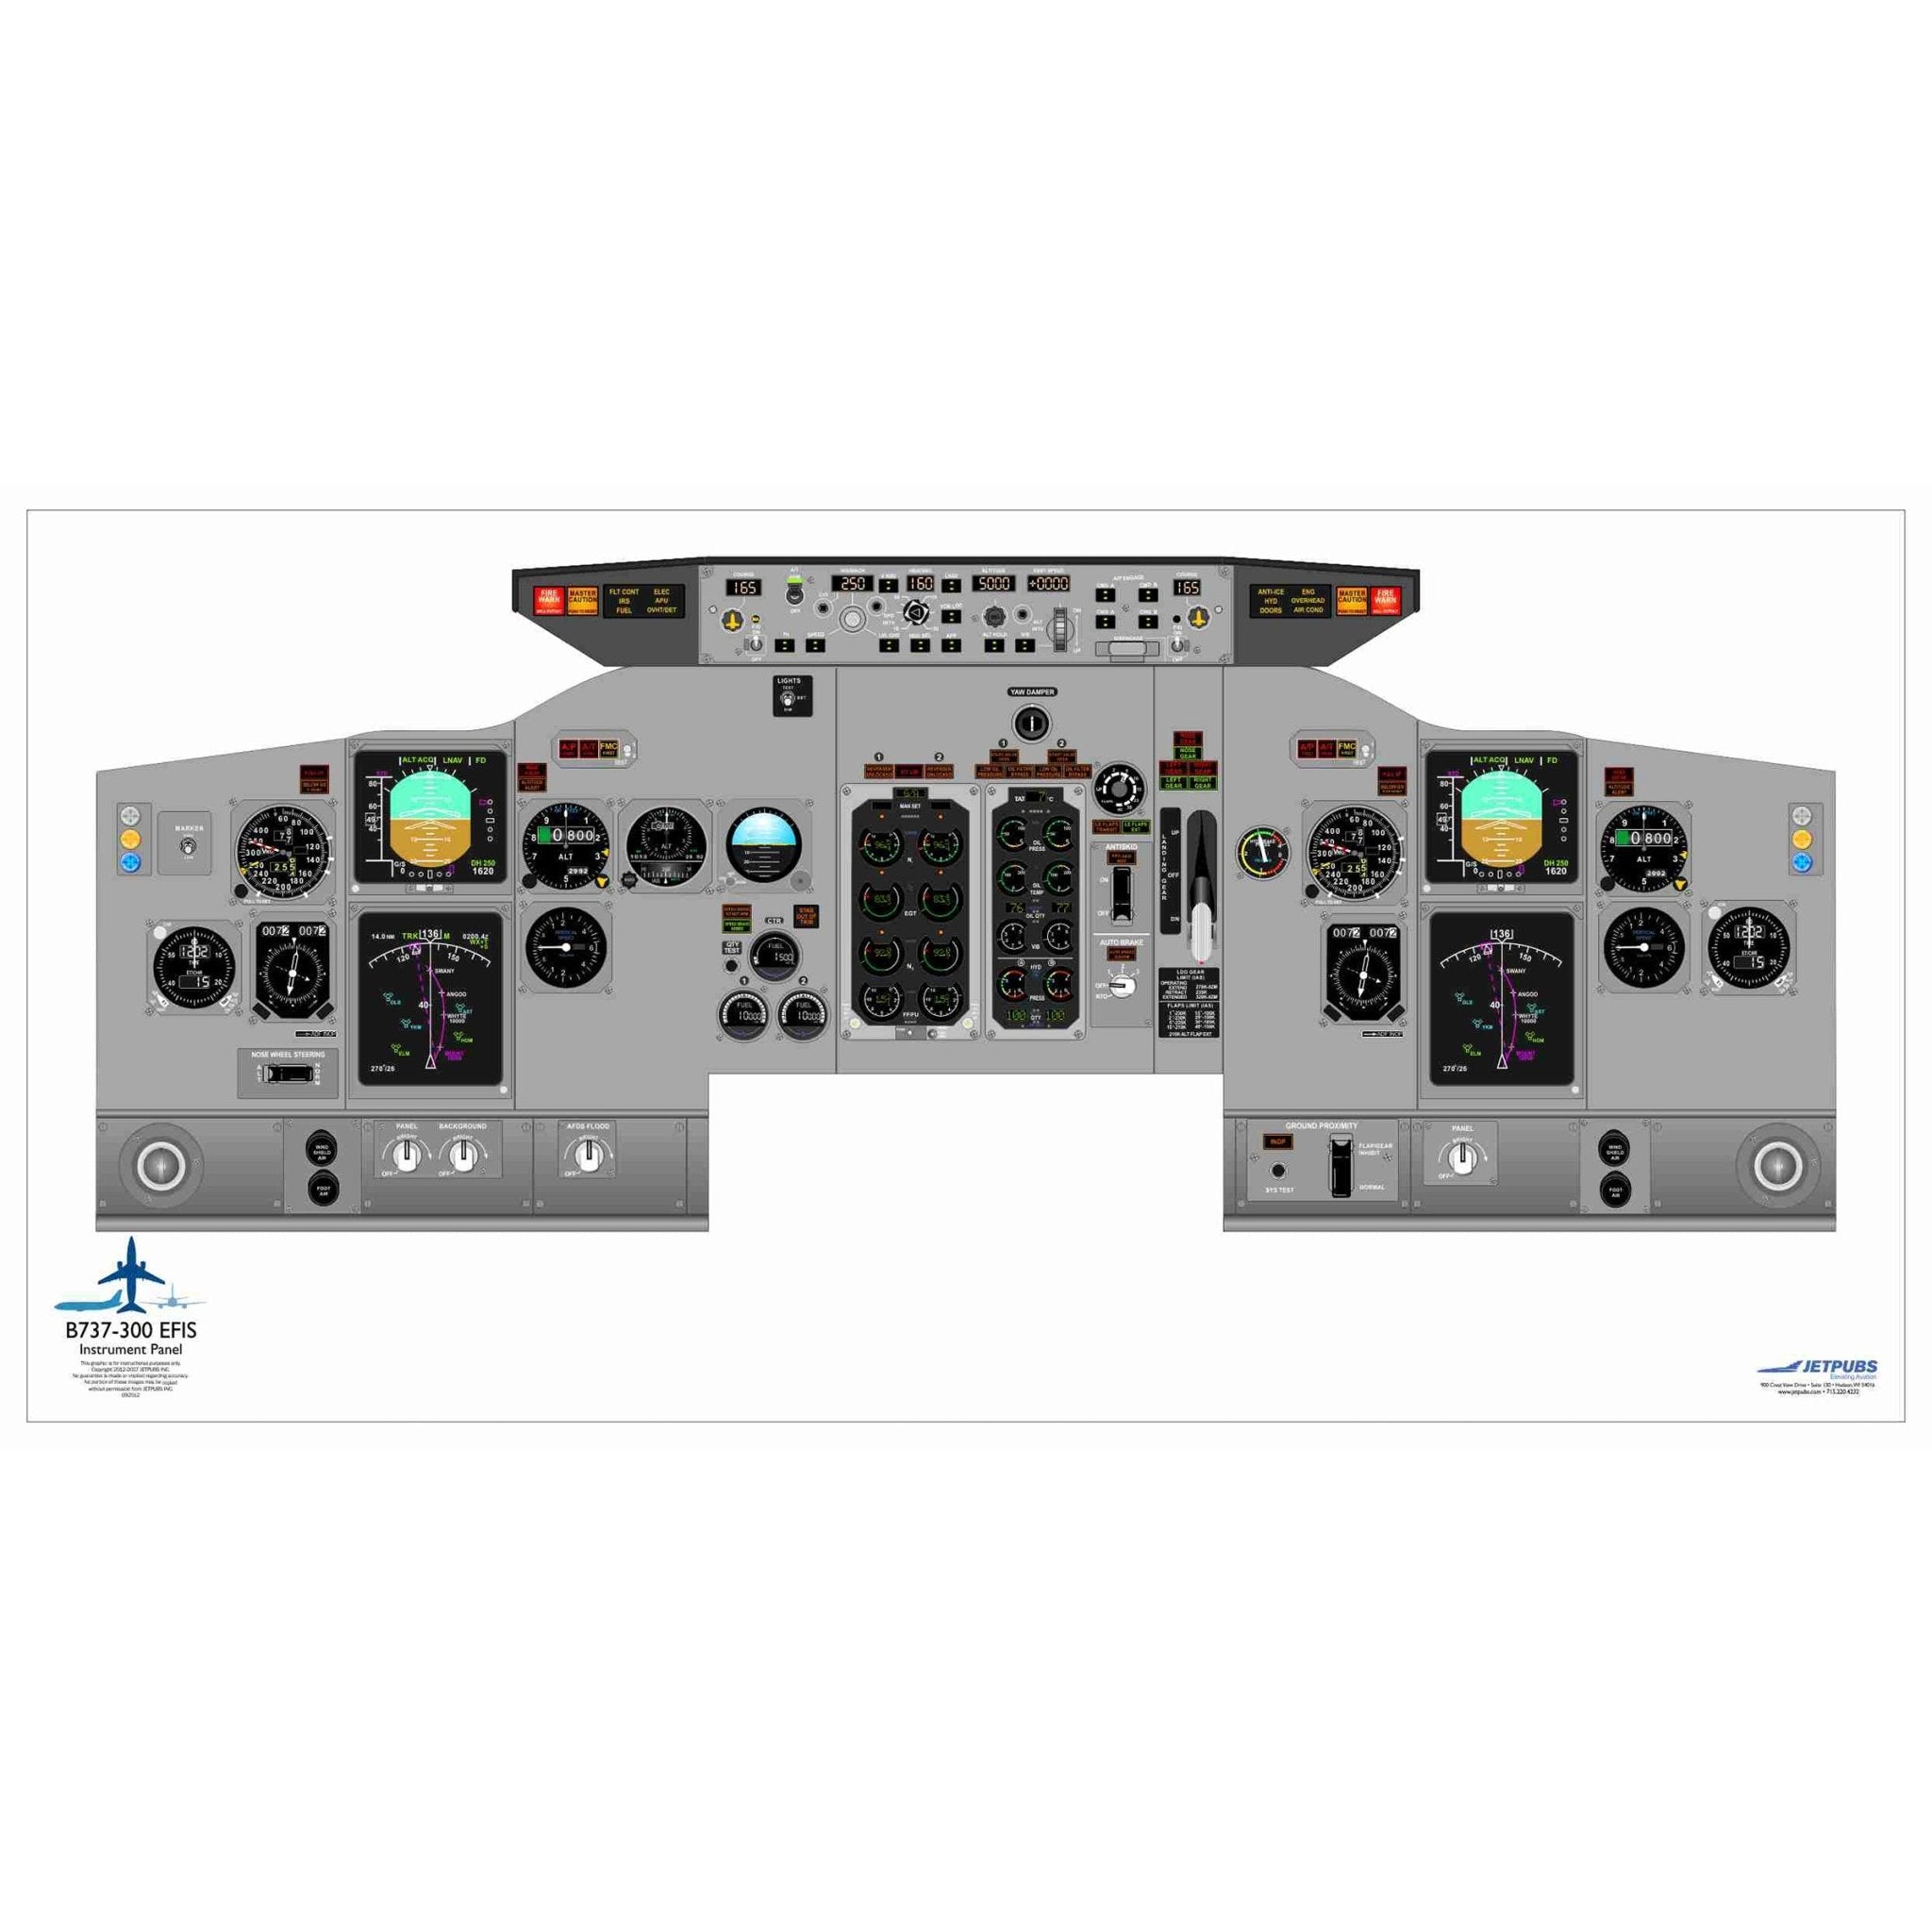 Boeing 18" x 36" Cockpit Posters - PilotMall.com